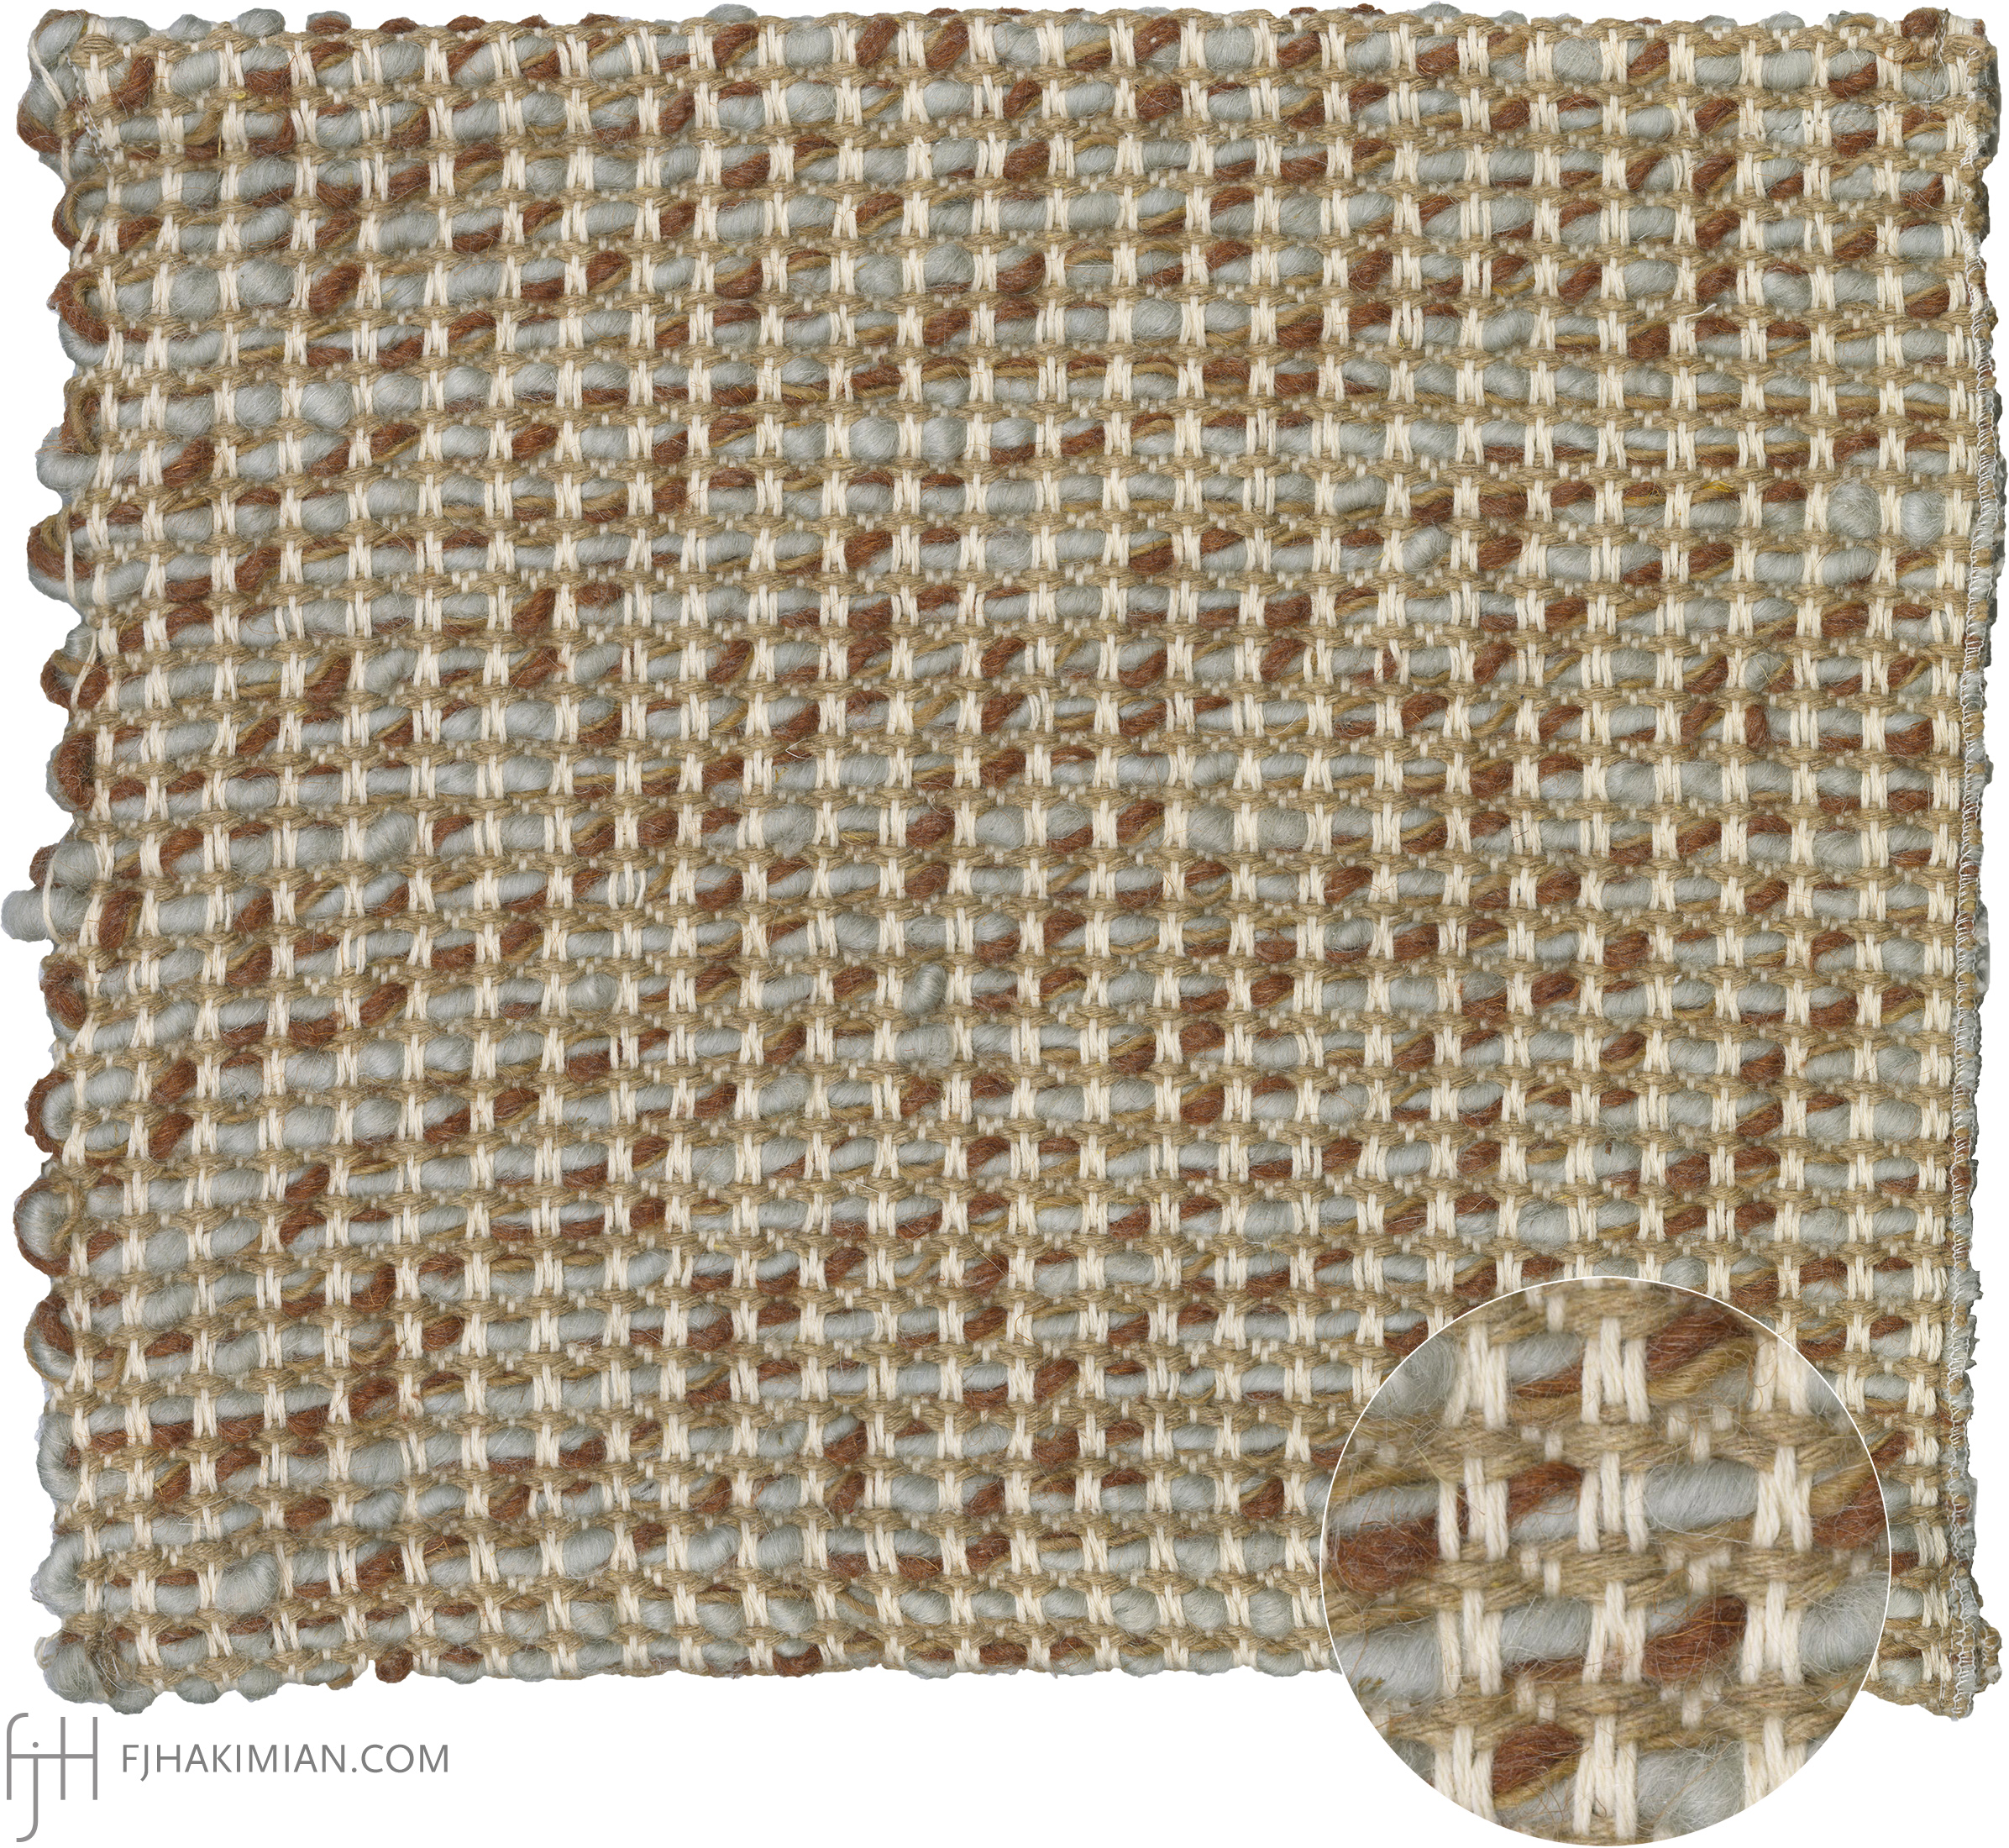 67605 | IF-317 | Custom Sardinian Carpet | FJ Hakimian | Carpet Gallery in NYC